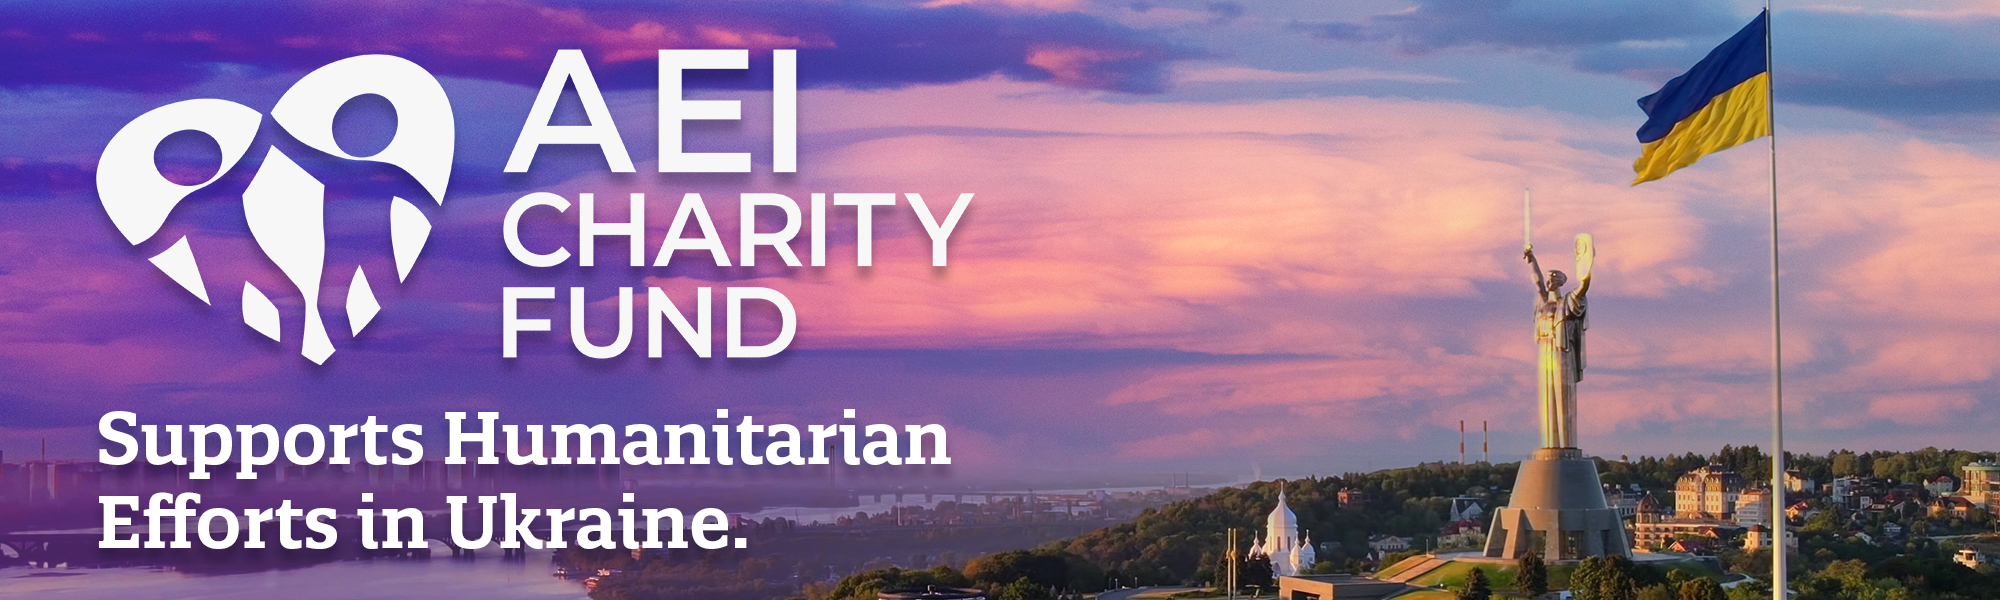 AEI Charity Fund Supports Humanitarian Efforts in Ukraine